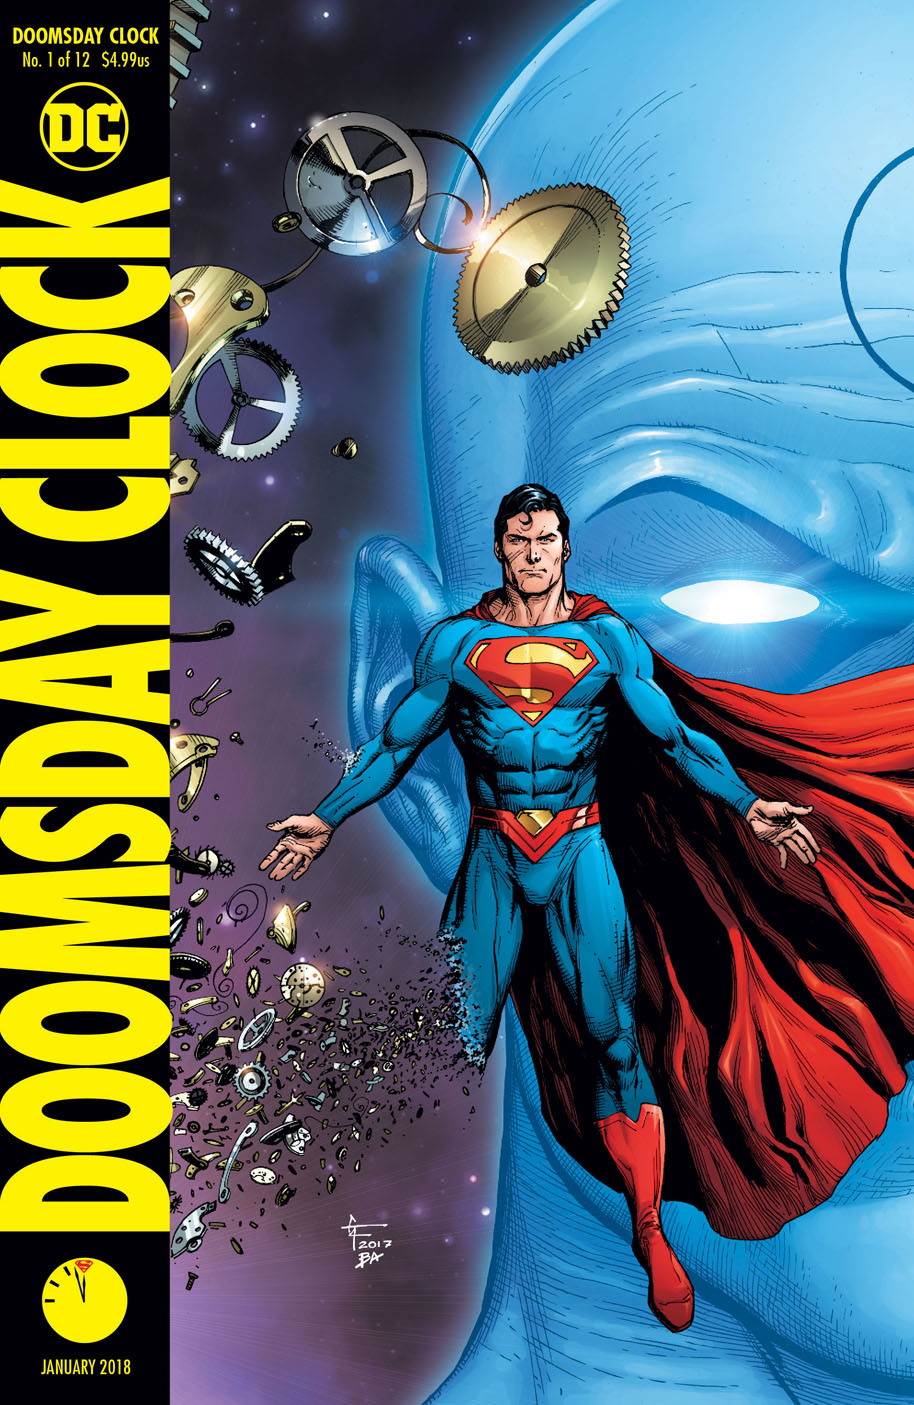 35-36 -  [DC COMICS] Publicaciones Universo DC: Discusión General v2 - Página 10 Variant-cover-of-doomsday-clock-1-with-superman-and-doctor-manhattan